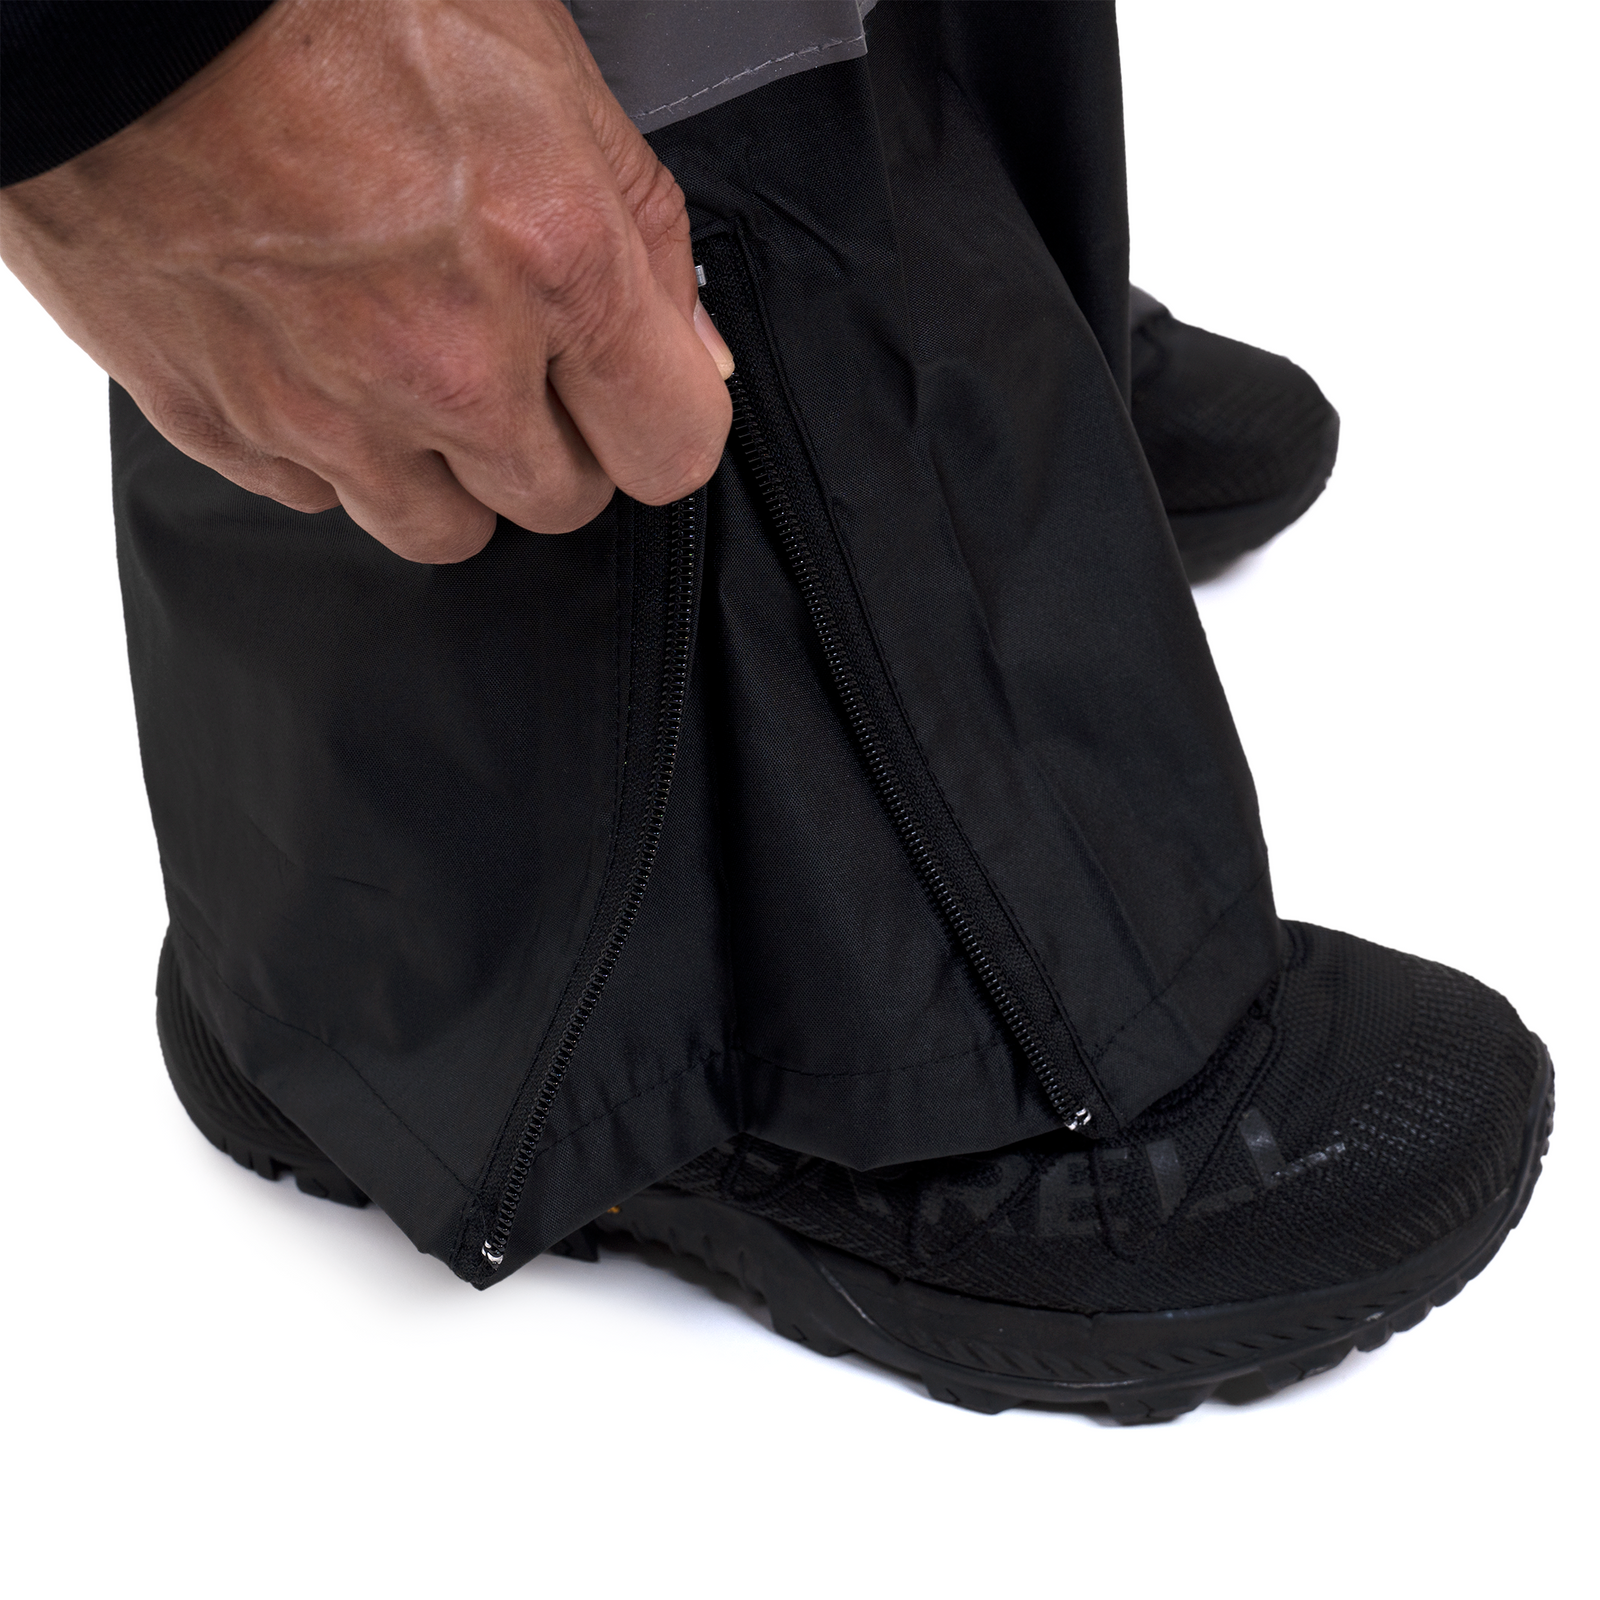 Waterproof Reflective Pants: 700STBK – Reflective Apparel Inc